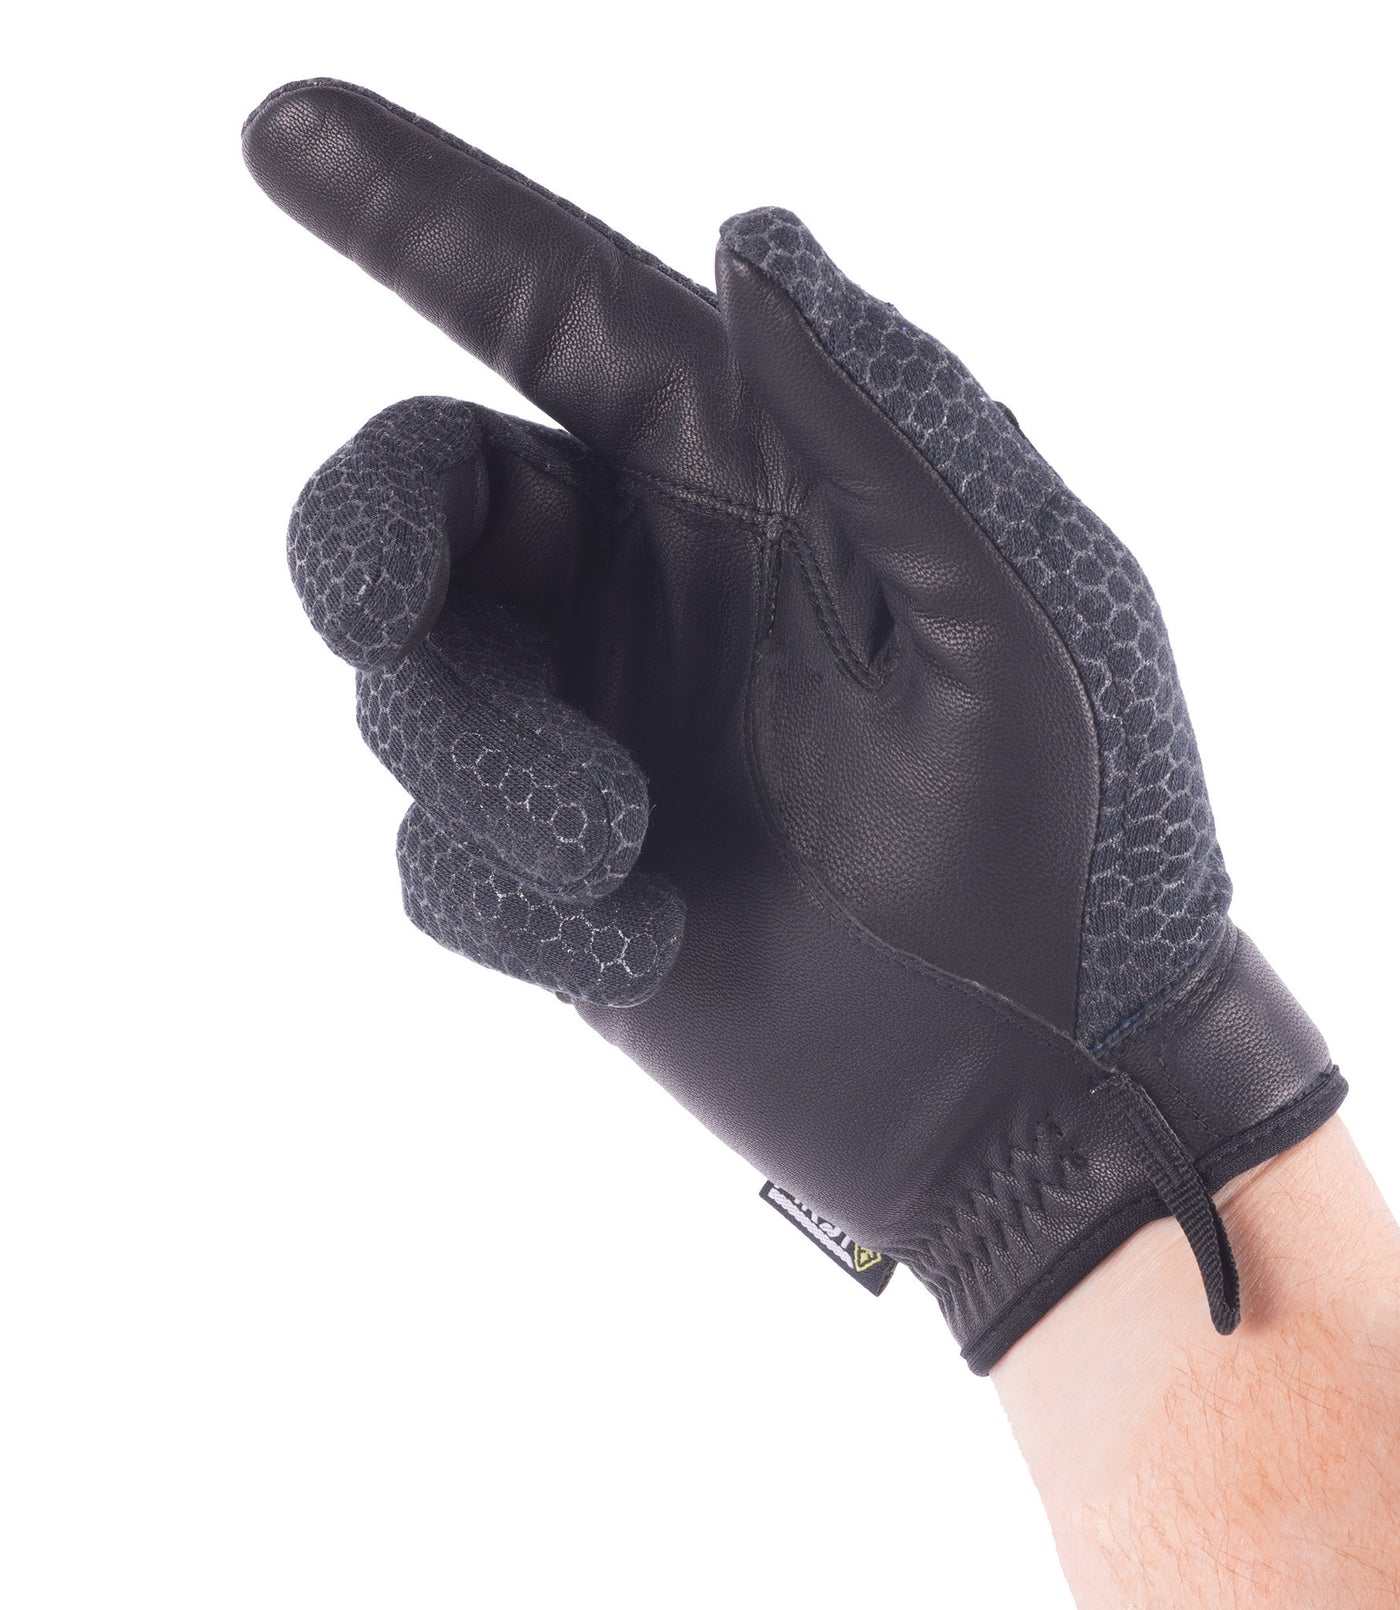 Seamless Finger of Men's Slash & Flash Protective Knuckle Glove in Black